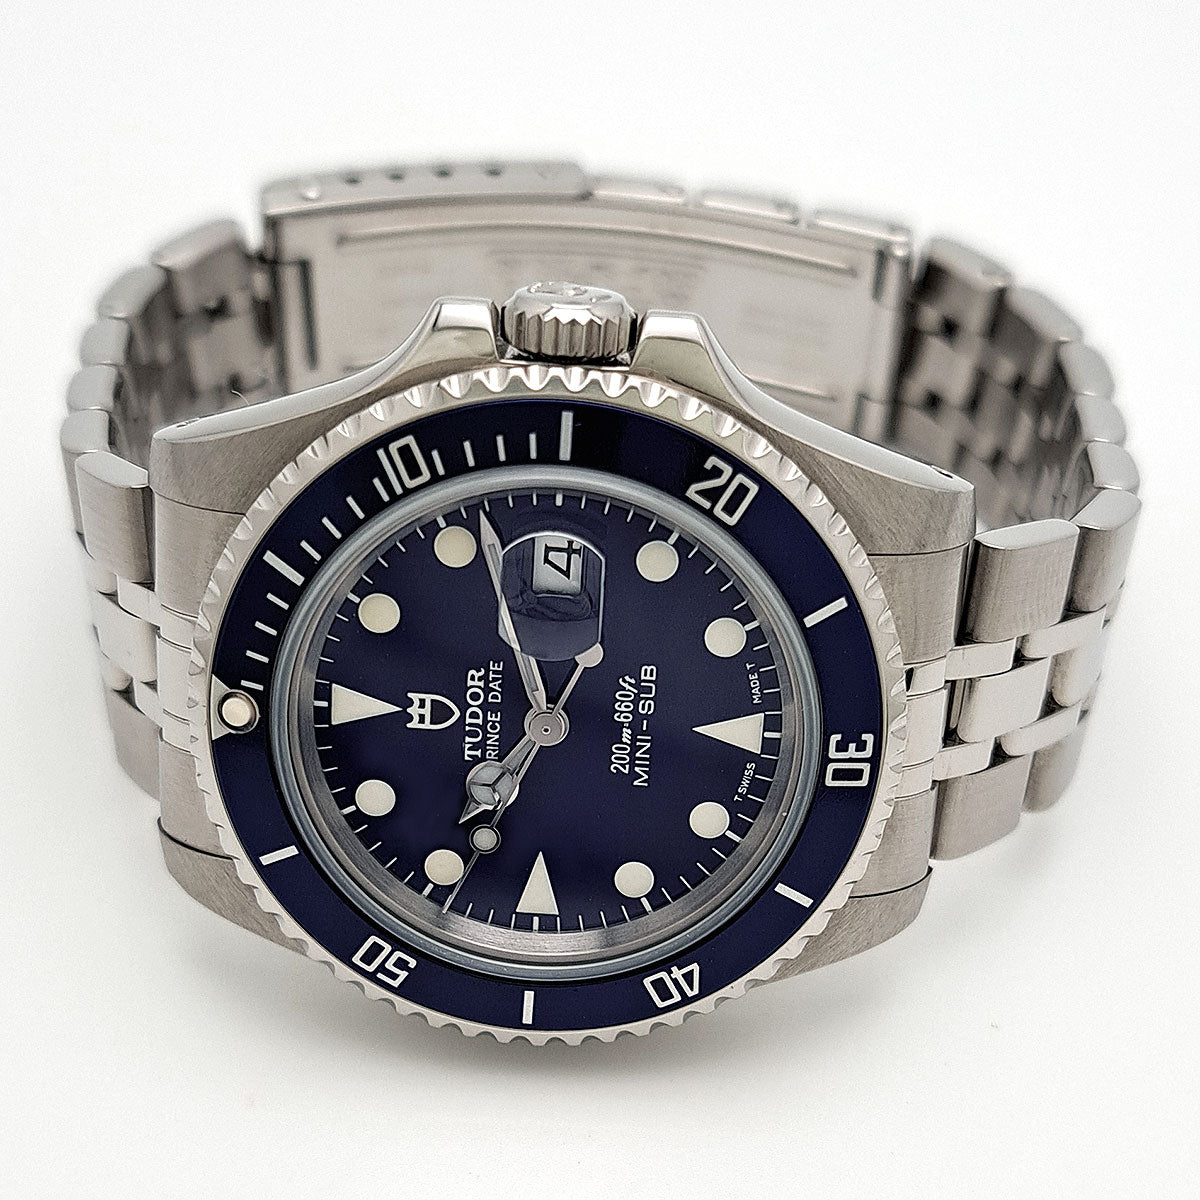 Automatic Prince Date Mini-Sub Wrist Watch 73190